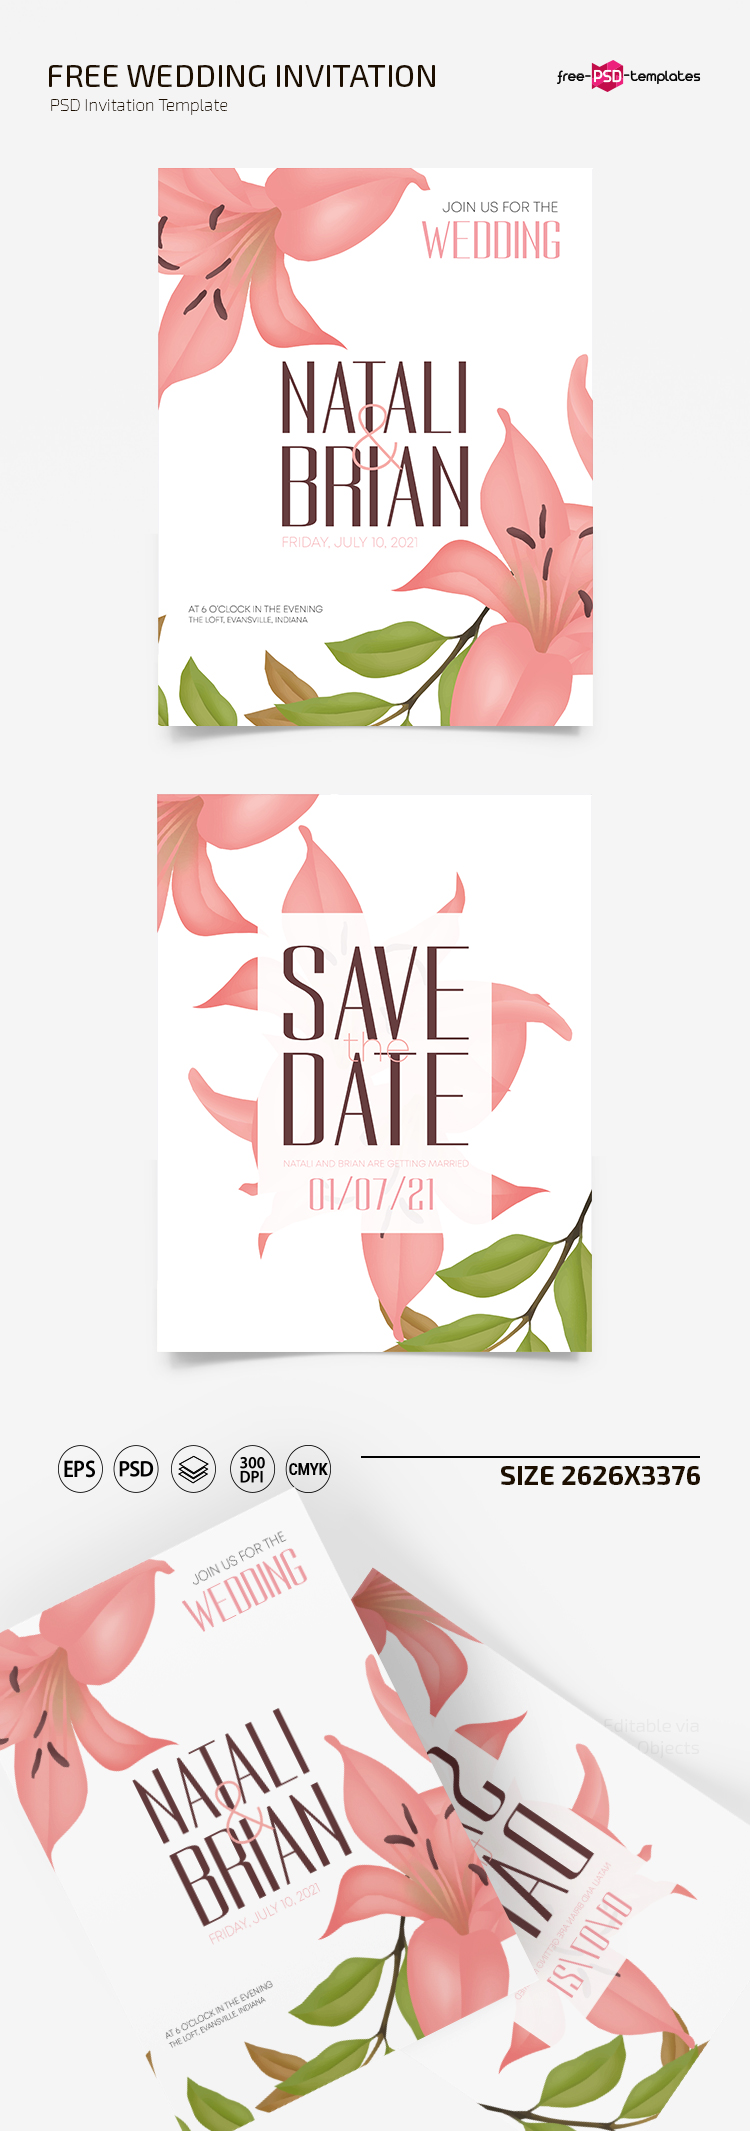 Free Floral Wedding Invitation Set Template Psd